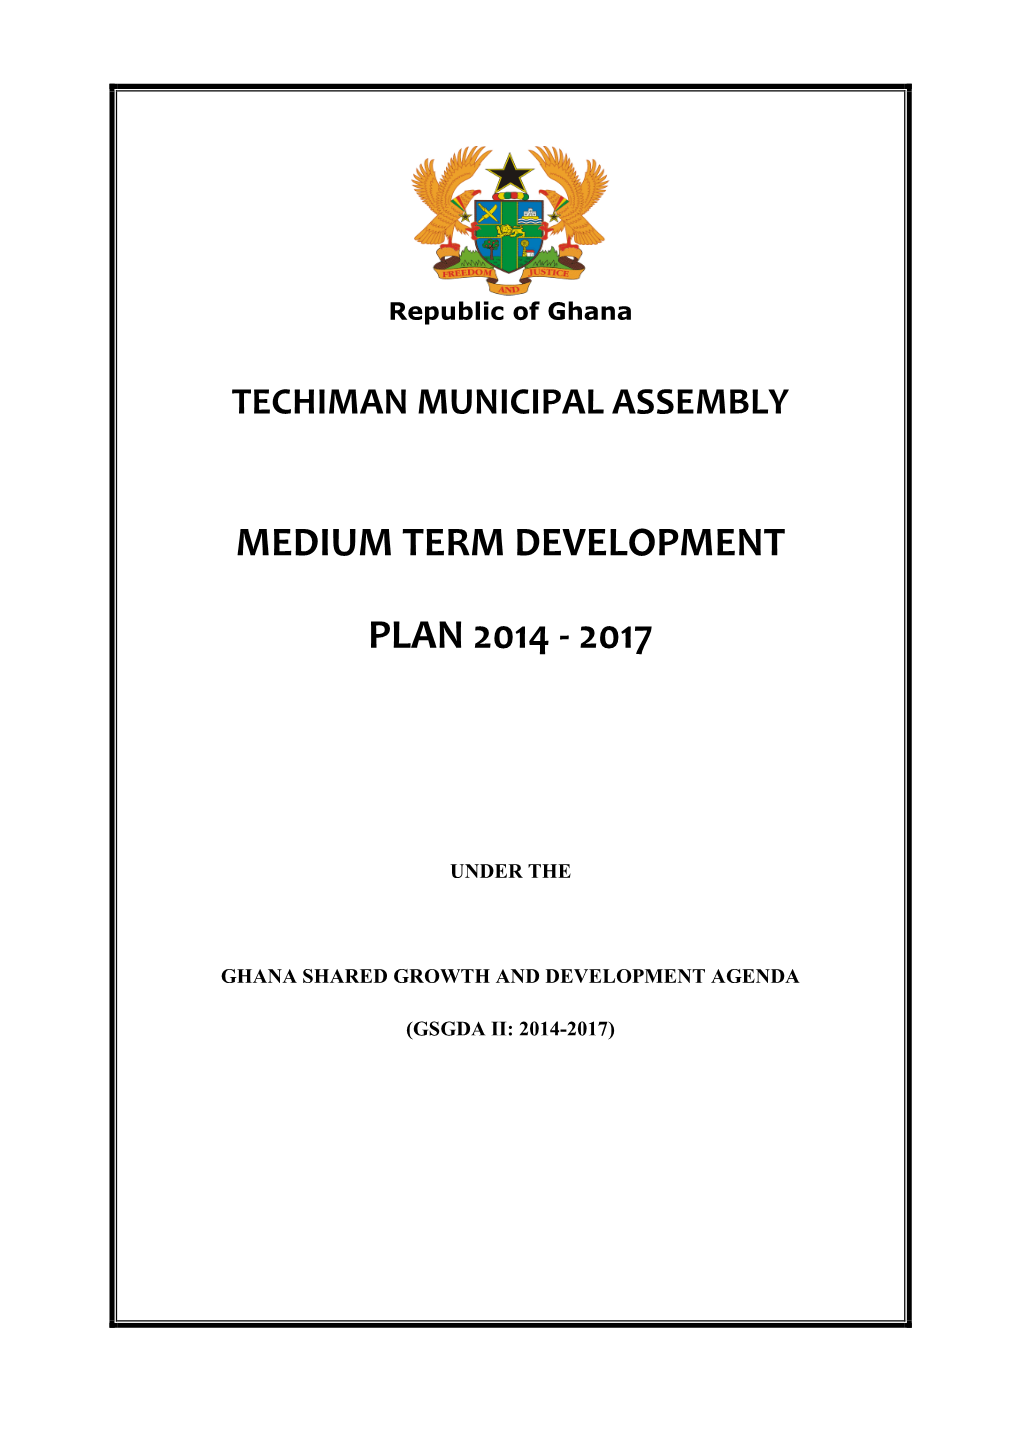 Medium Term Development Plan 2014